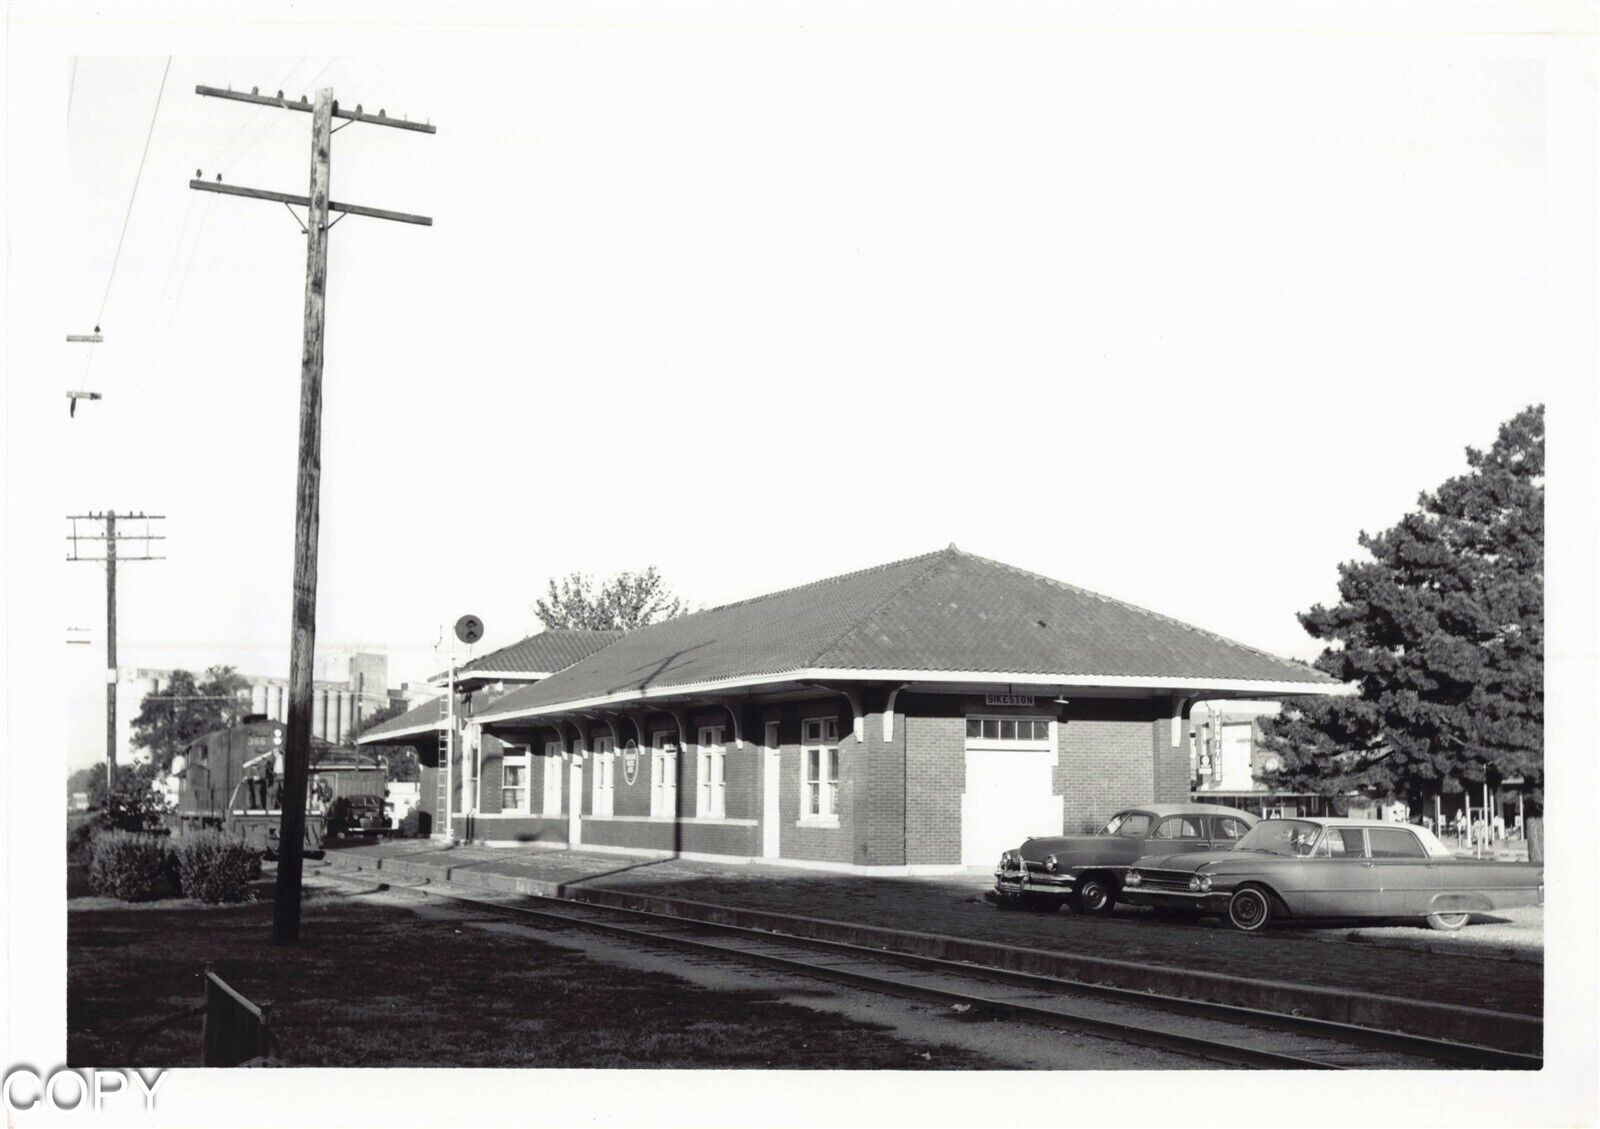 2 views Sikeston Mo 1967-66 Depo Railroad Station 5 x 7 Photo RR57 